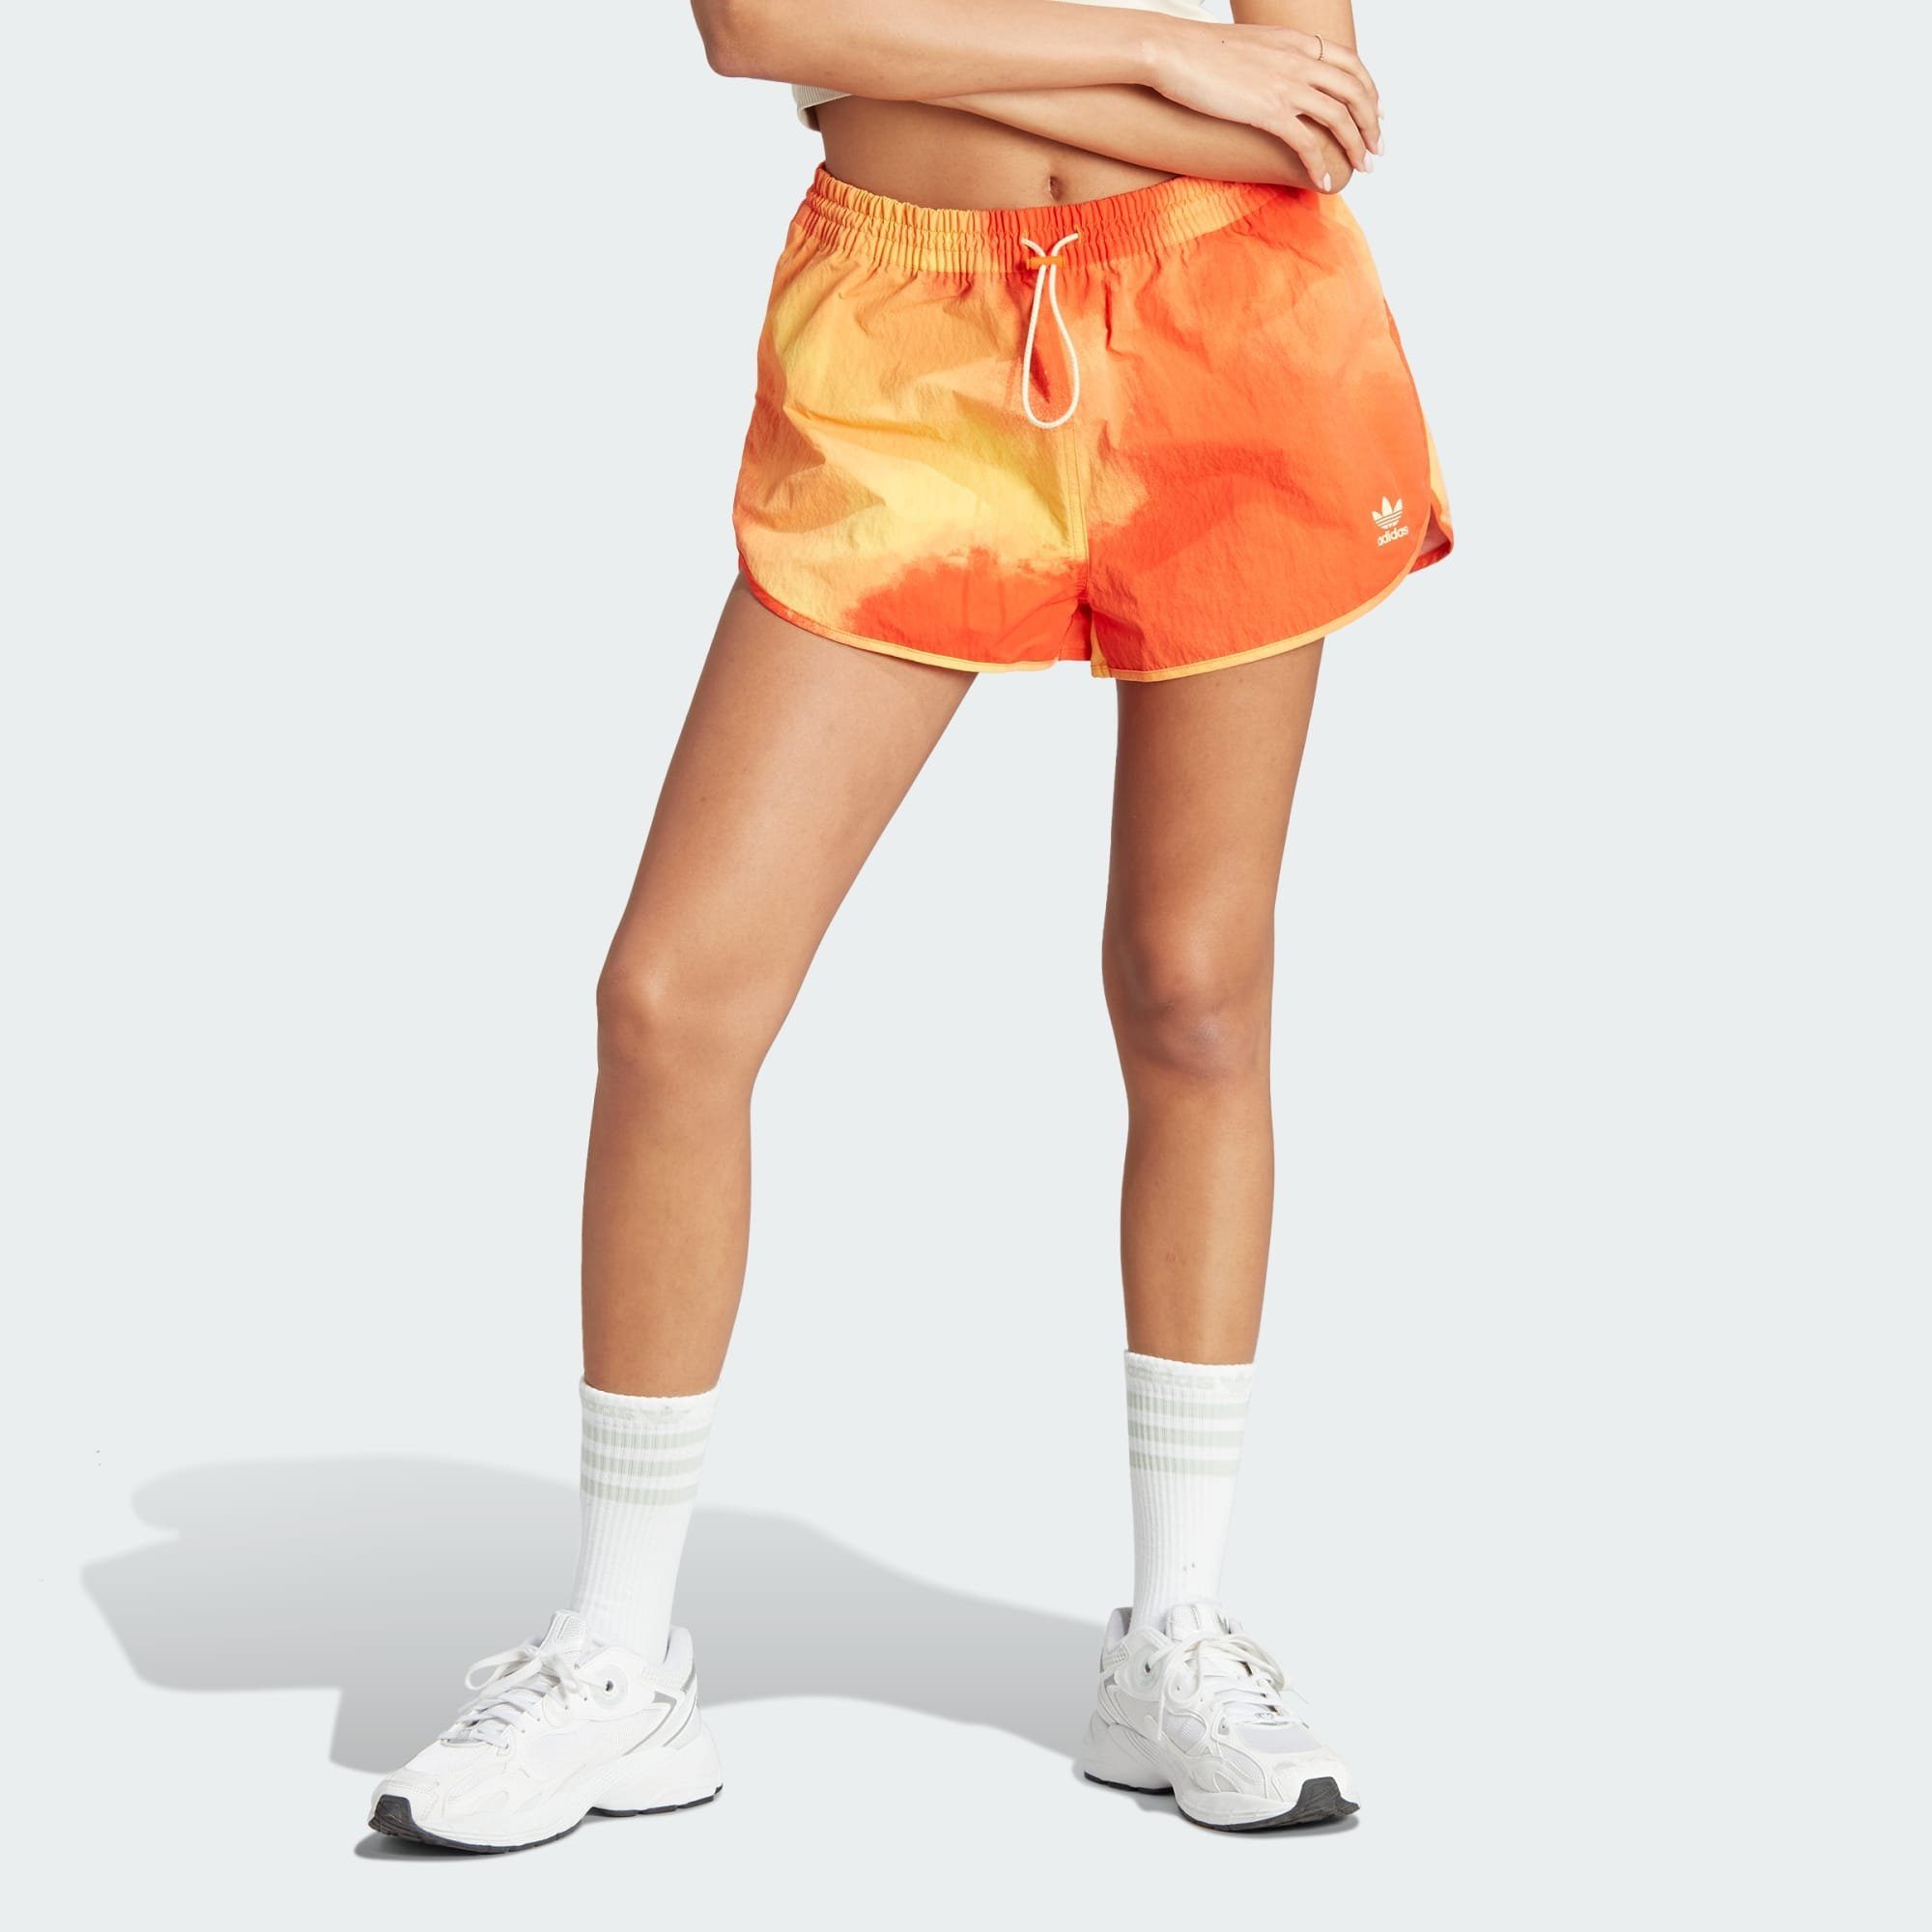 RUNNER / Shorts adidas SHORTS Gold FADE Bold Multicolor Originals COLOR